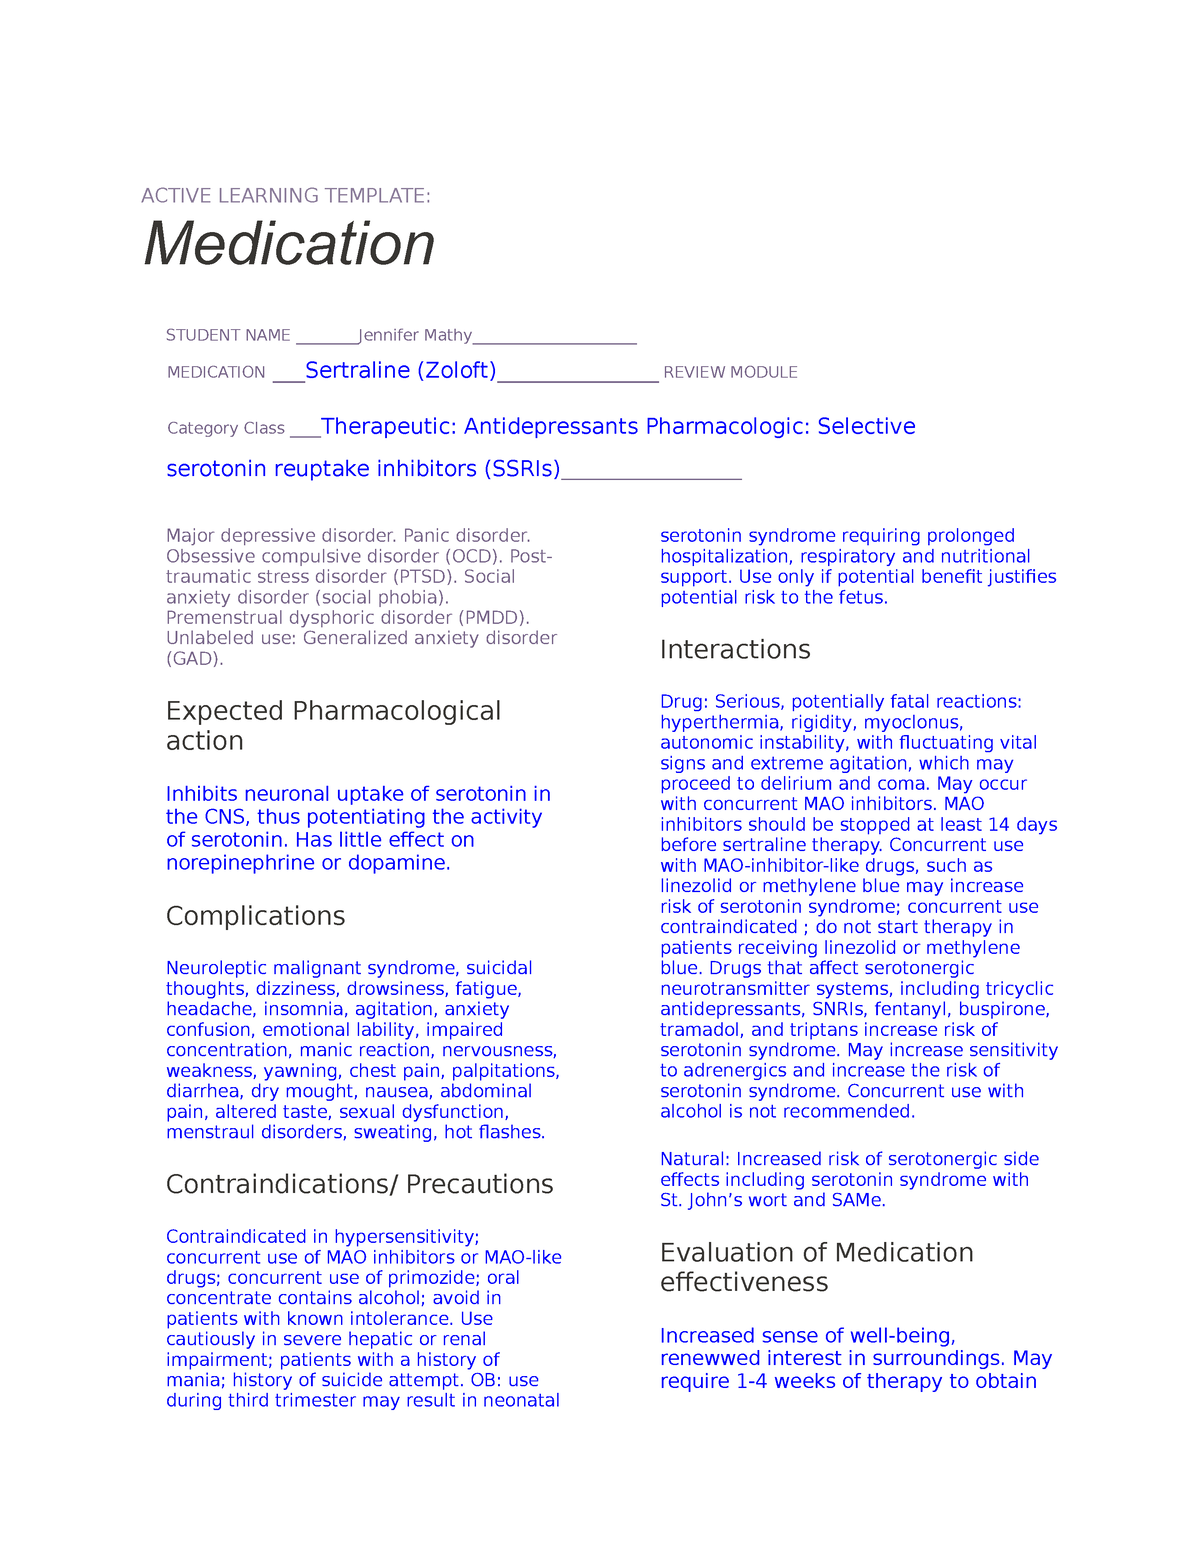 sertraline-zoloft-meds-active-learning-template-medication